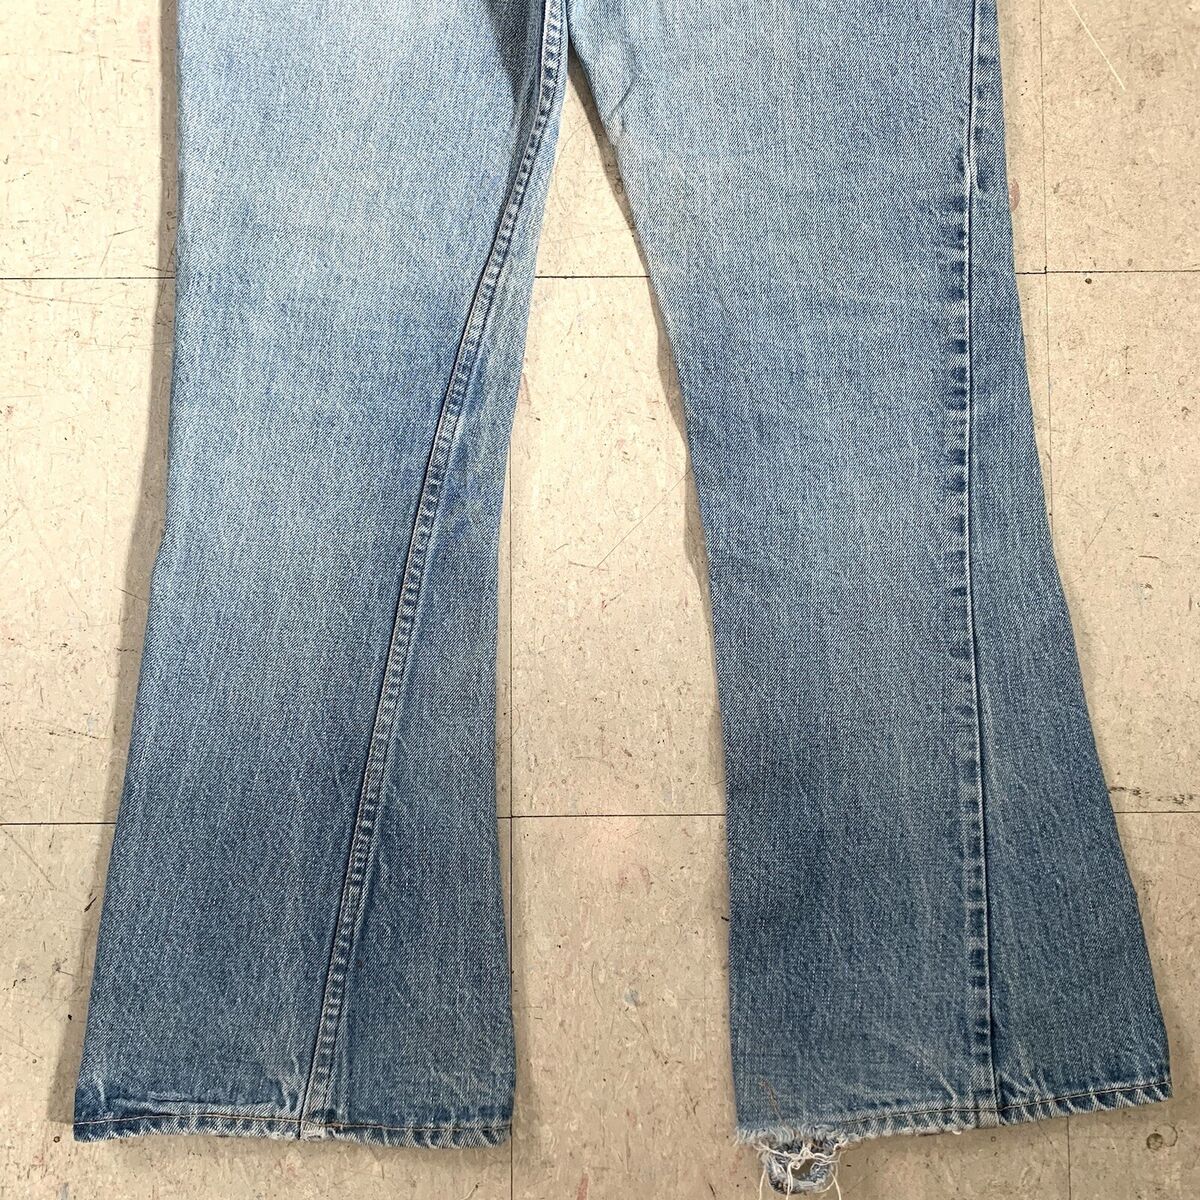 Vintage Levi’s 646 Orange Tab Made In USA Denim Jeans 30x29 Talon Zip